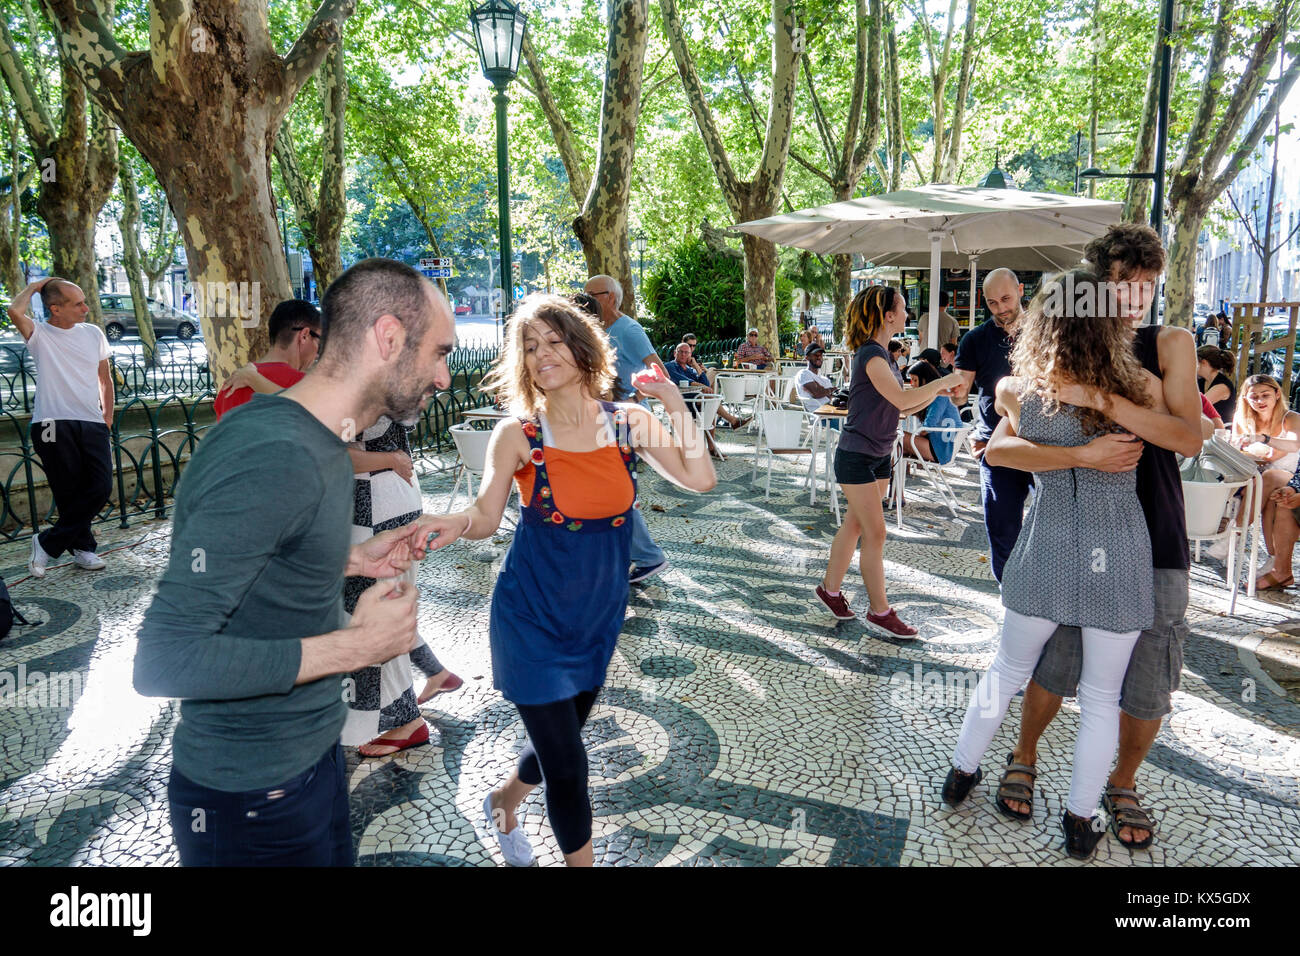 Lisbonne Portugal,Avenida Da Liberdade,promenade jardin,hispanique,immigrants,homme hommes,femme femmes,couple,danse,hispanique,immigré Banque D'Images